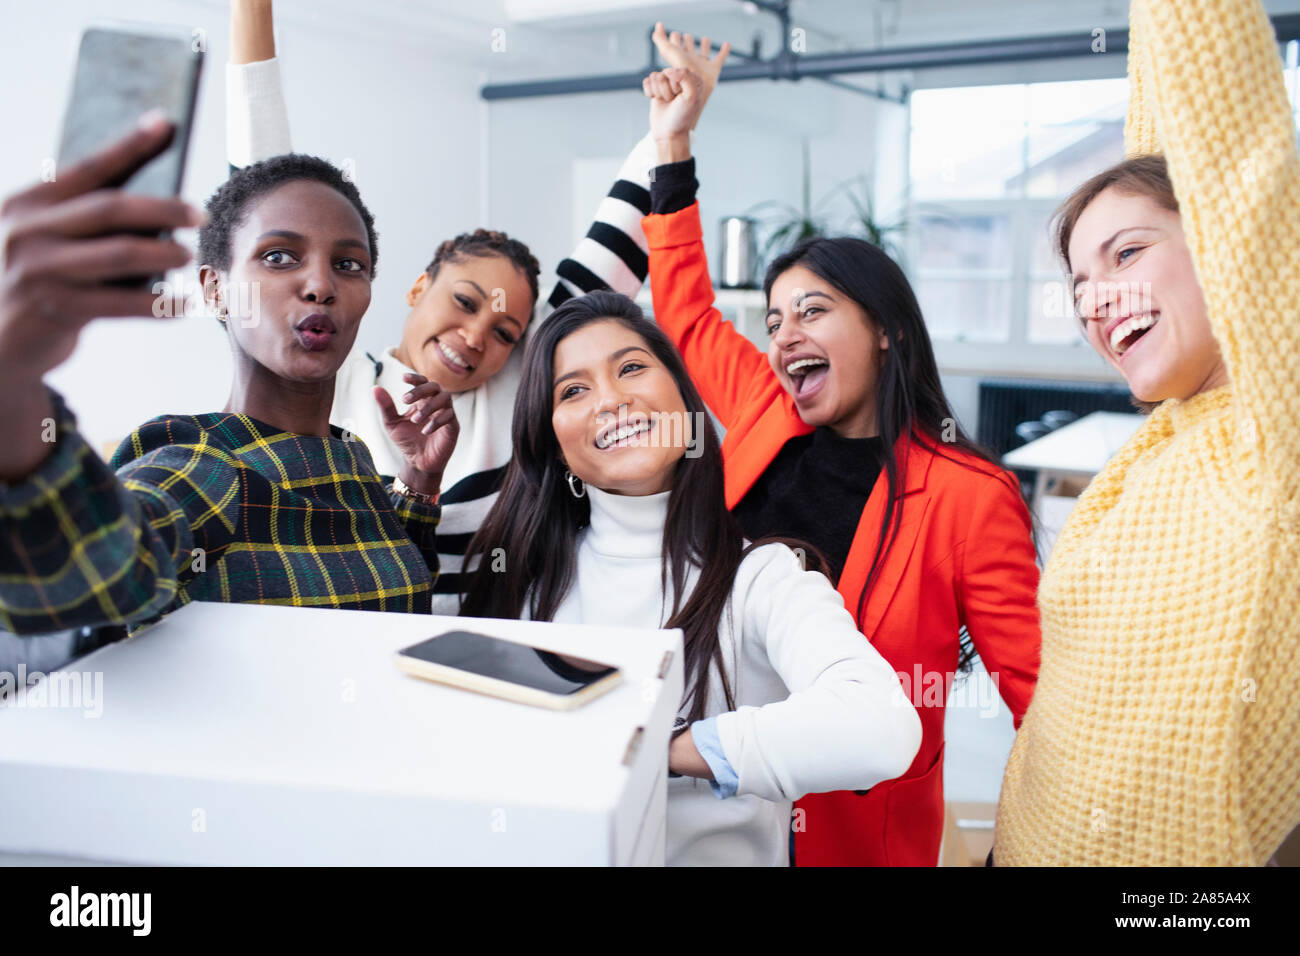 Happy businesswomen celebrating new office, taking selfie Stock Photo